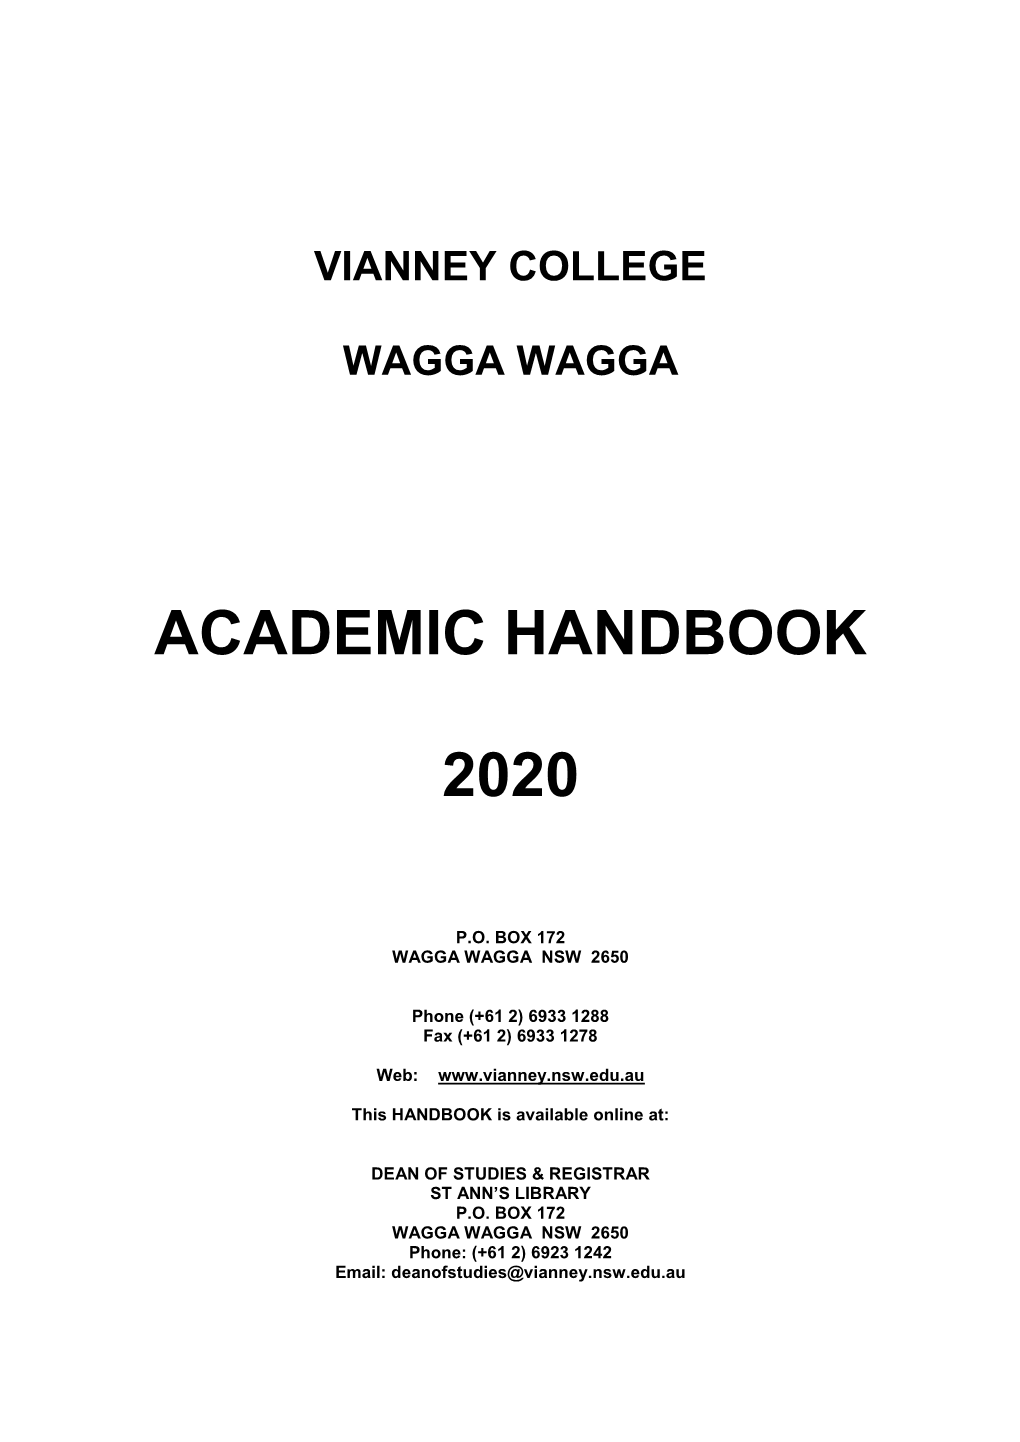 Academic Handbook 2020